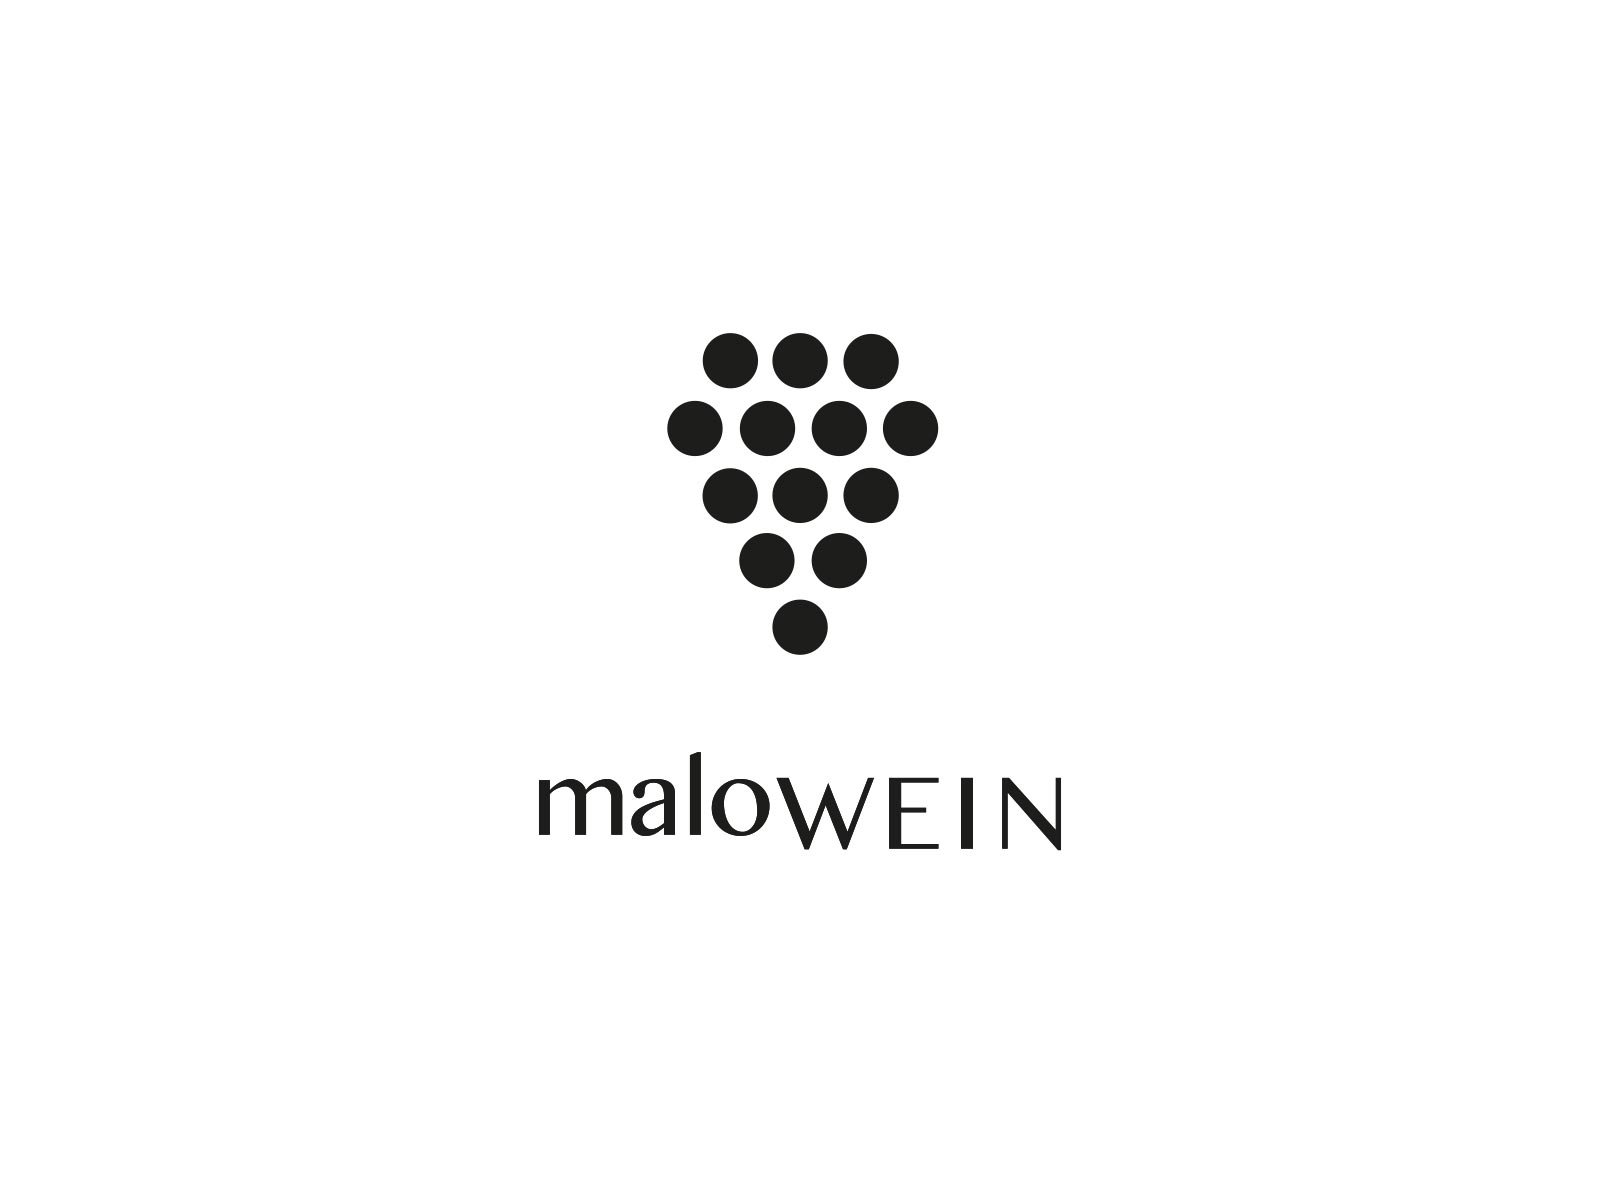 maloWEIN – Bar // Store // Café